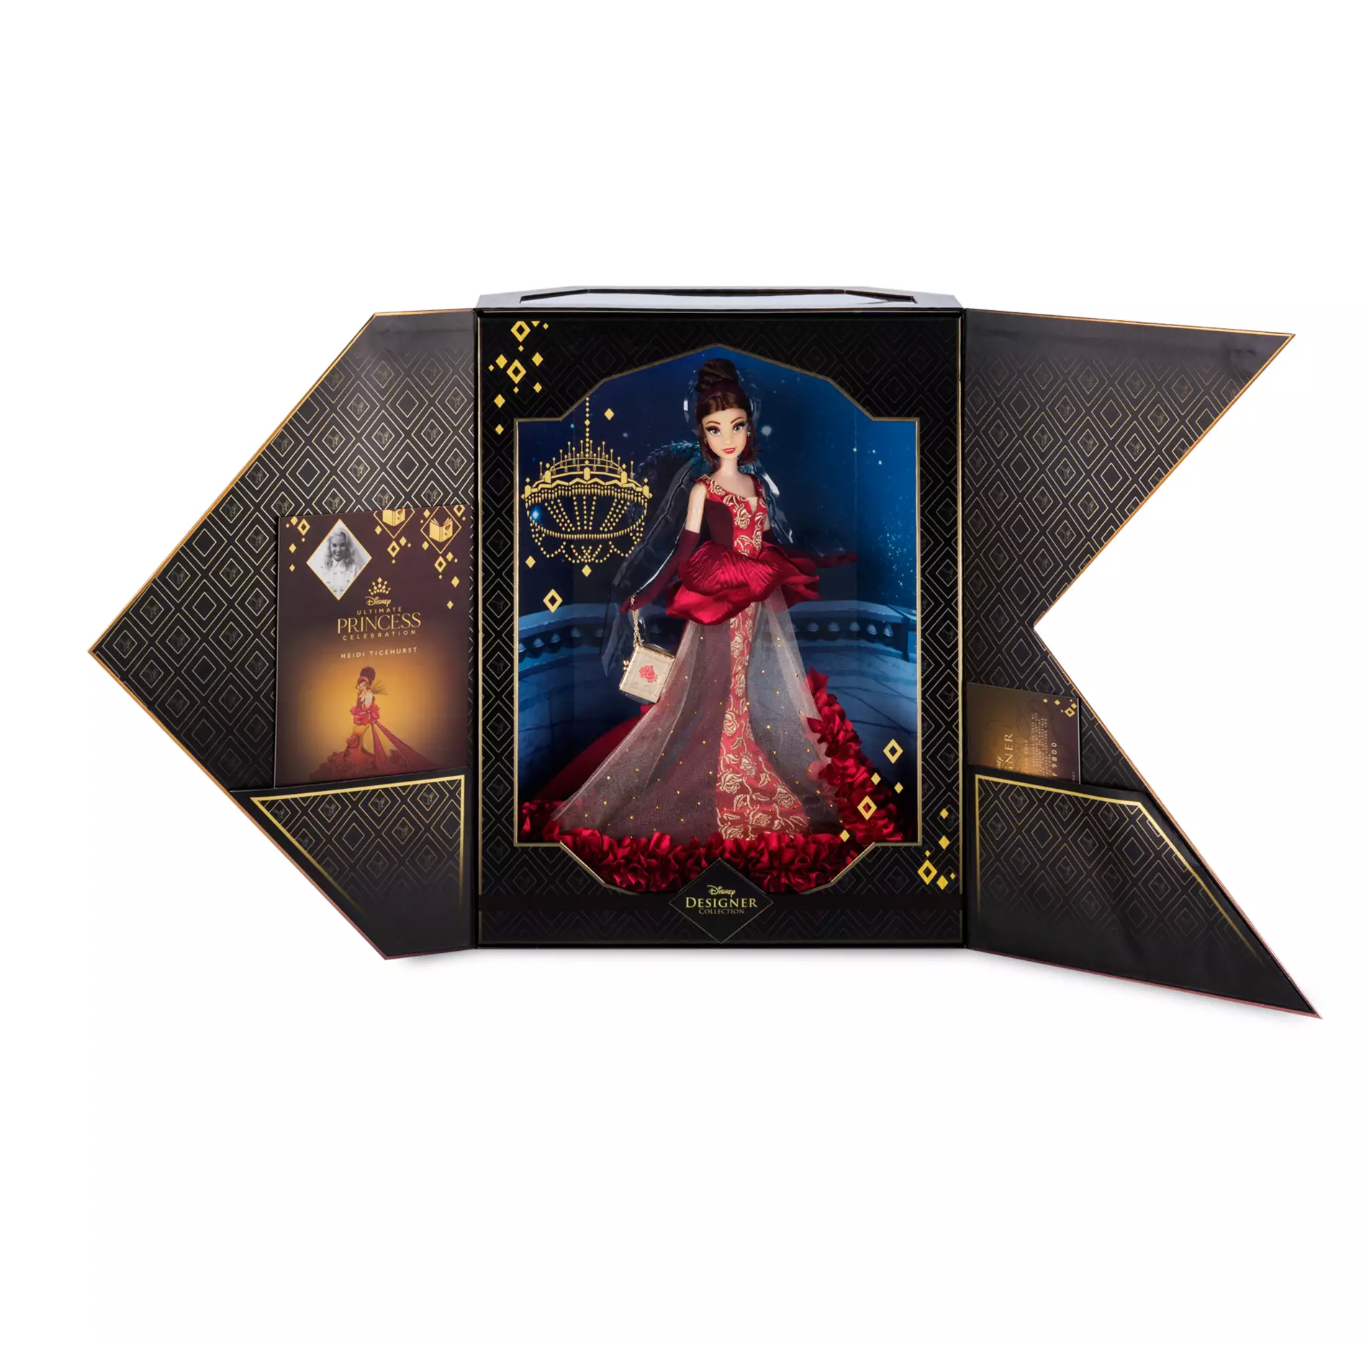 Disney Ultimate Princess Celebration Designer Belle Limited Doll New with Box